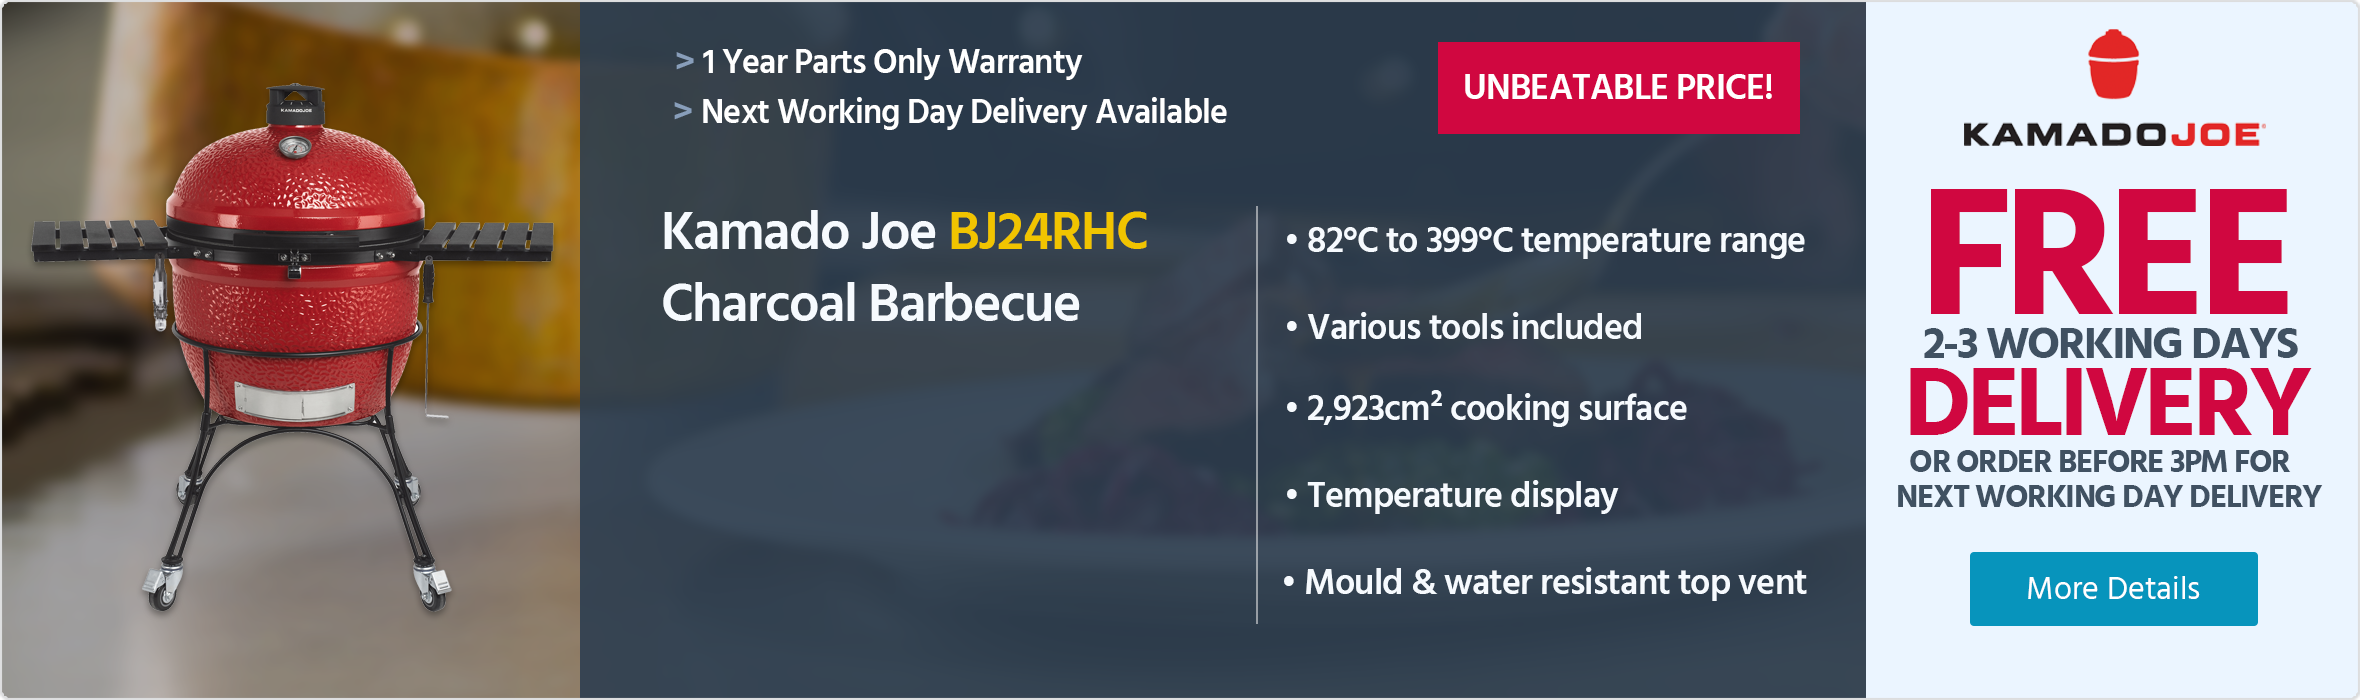 Kamado Joe Big Joe II BJ24RHC Two Tier Charcoal Barbecue